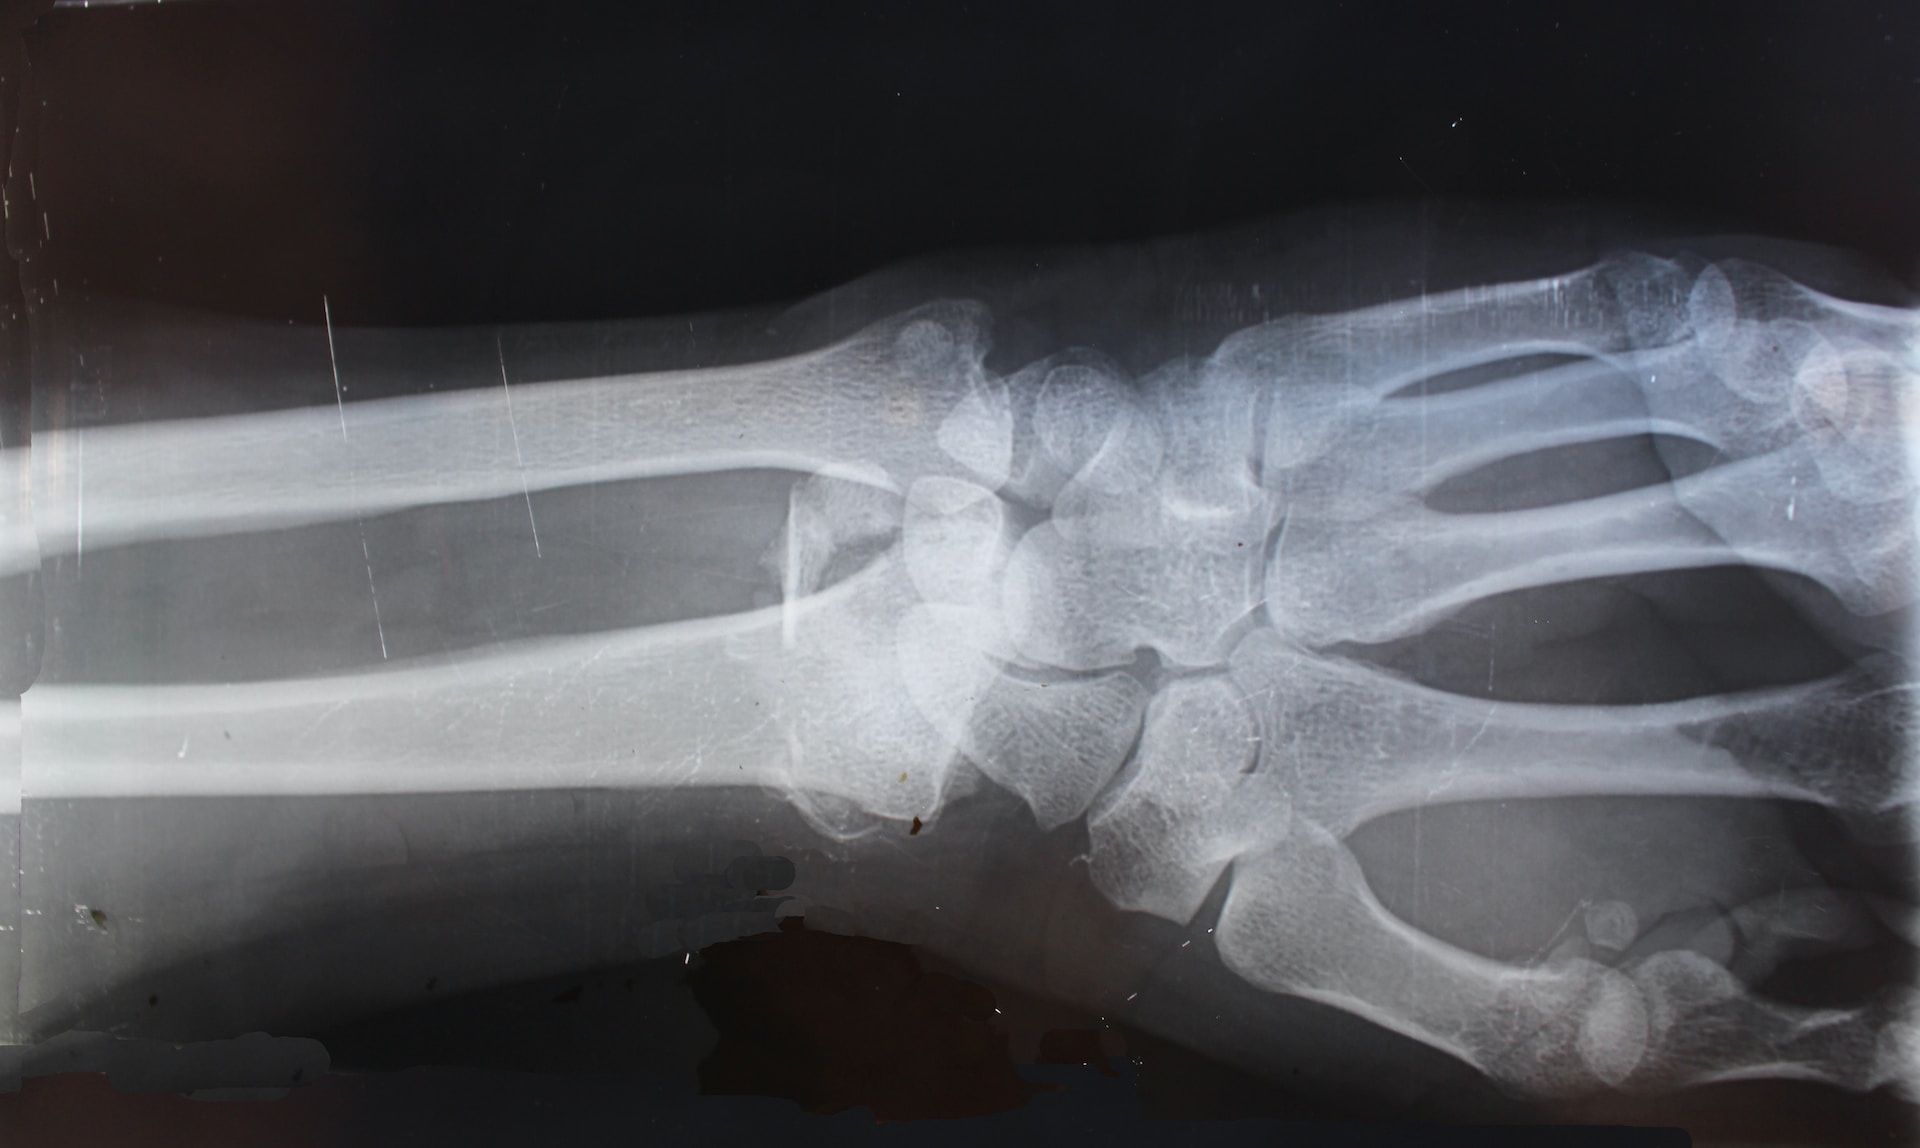 Wrist x ray